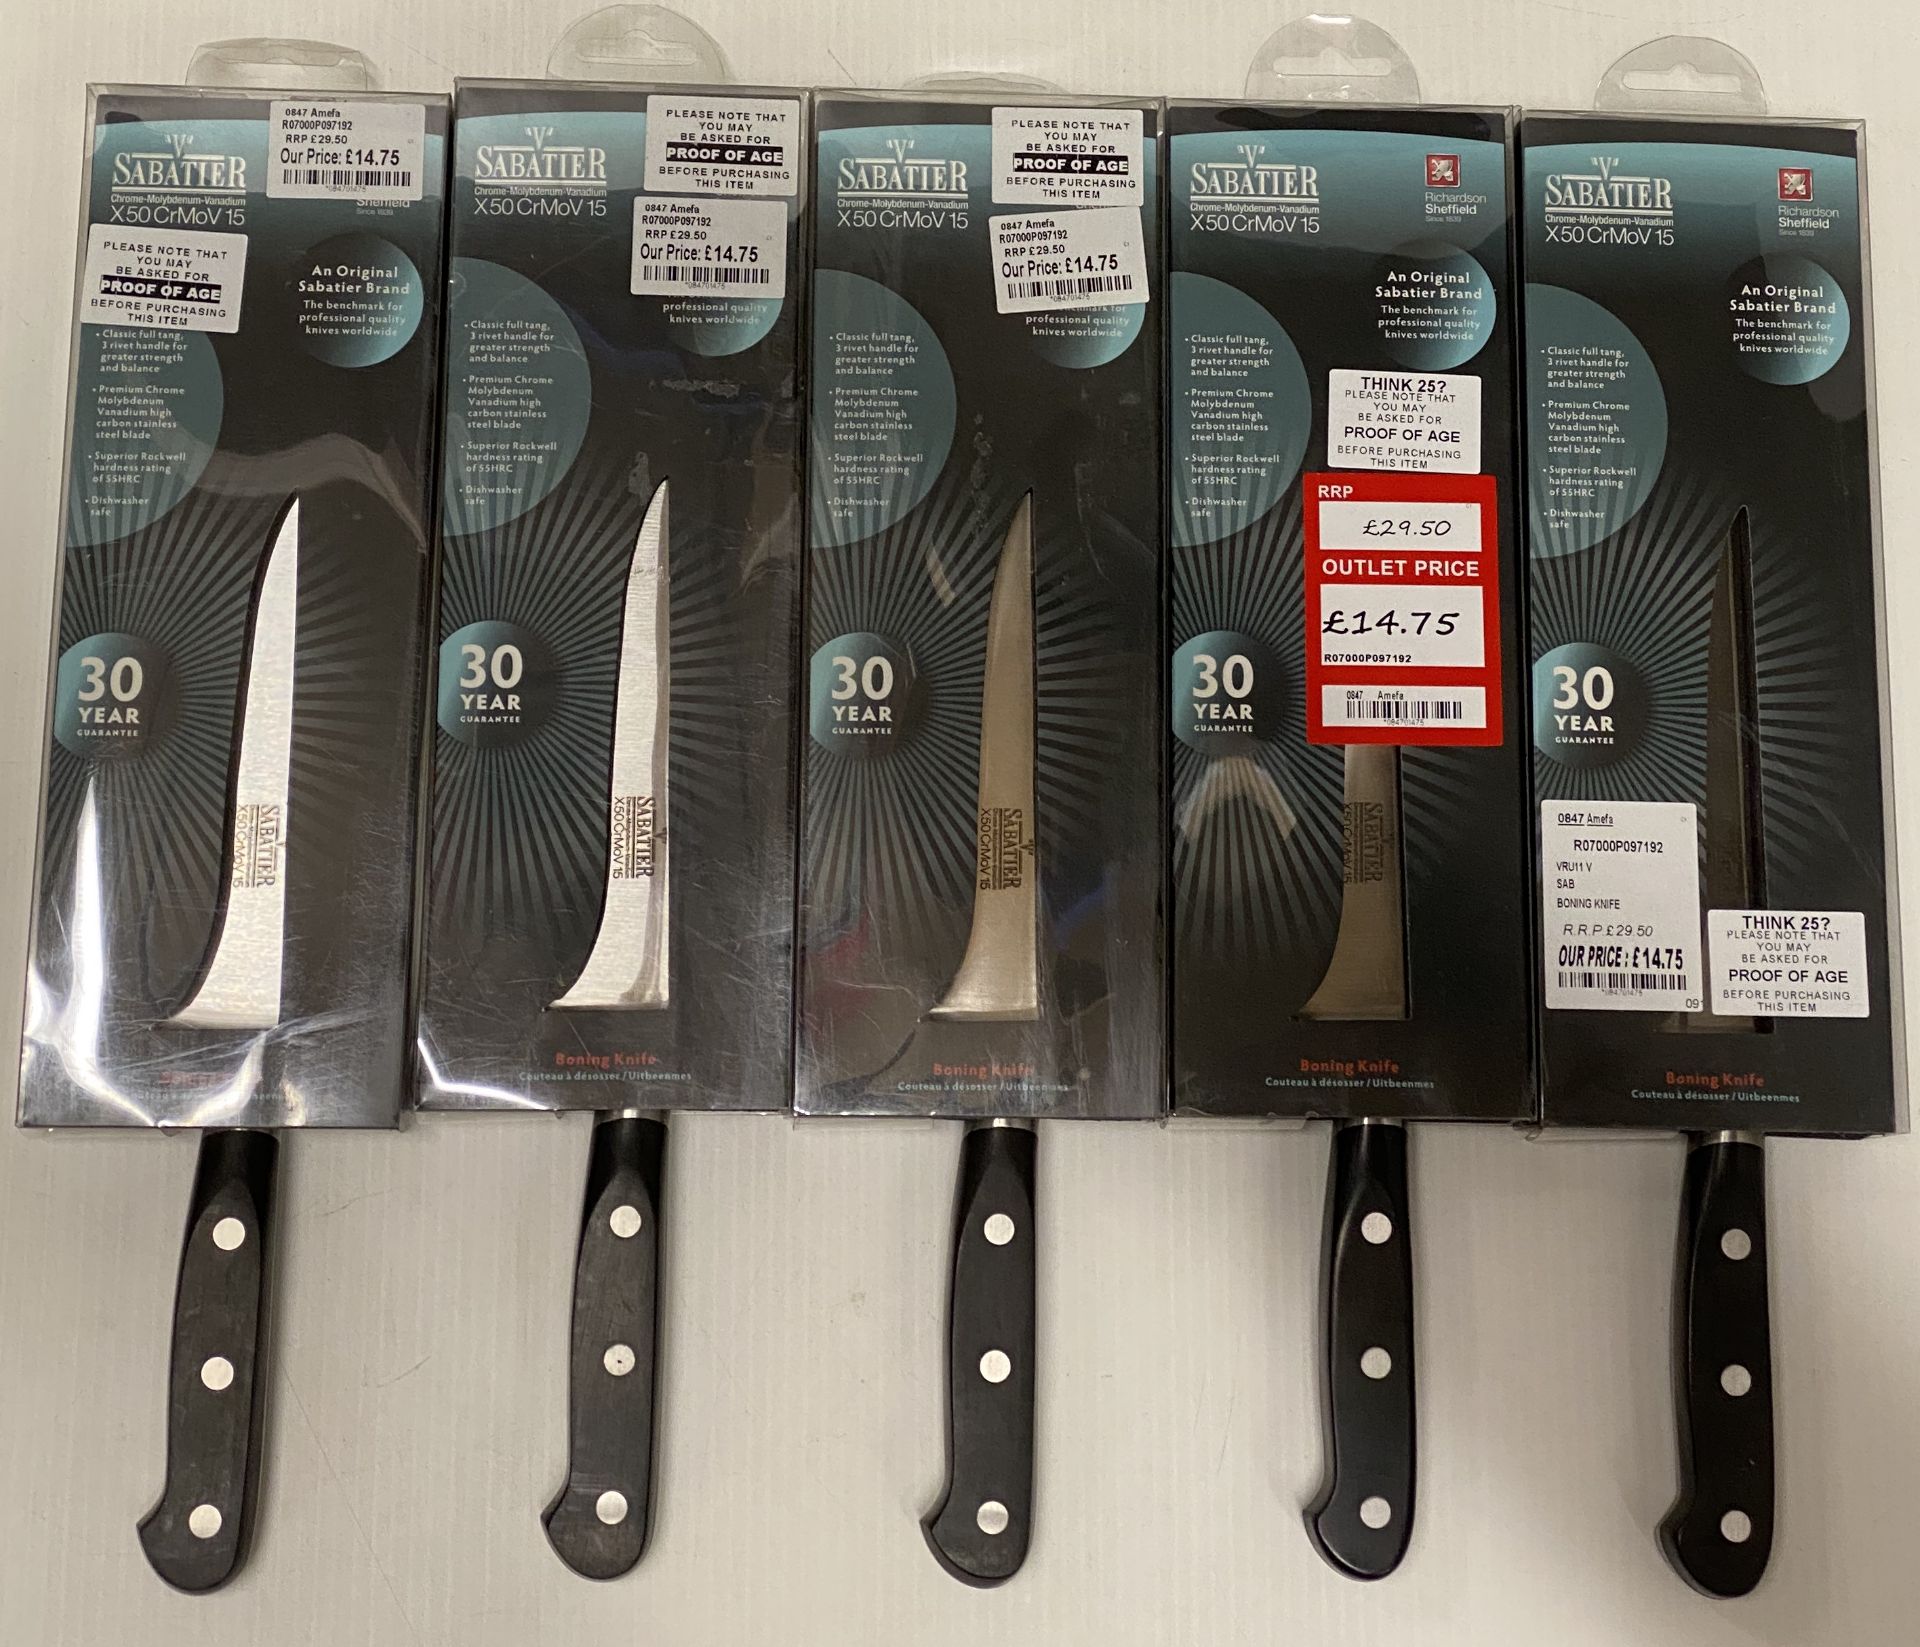 5 x Richardson Sheffield 'V' Sabatier X50 CrMoV 15 stainless steel boning knives RRP £29.